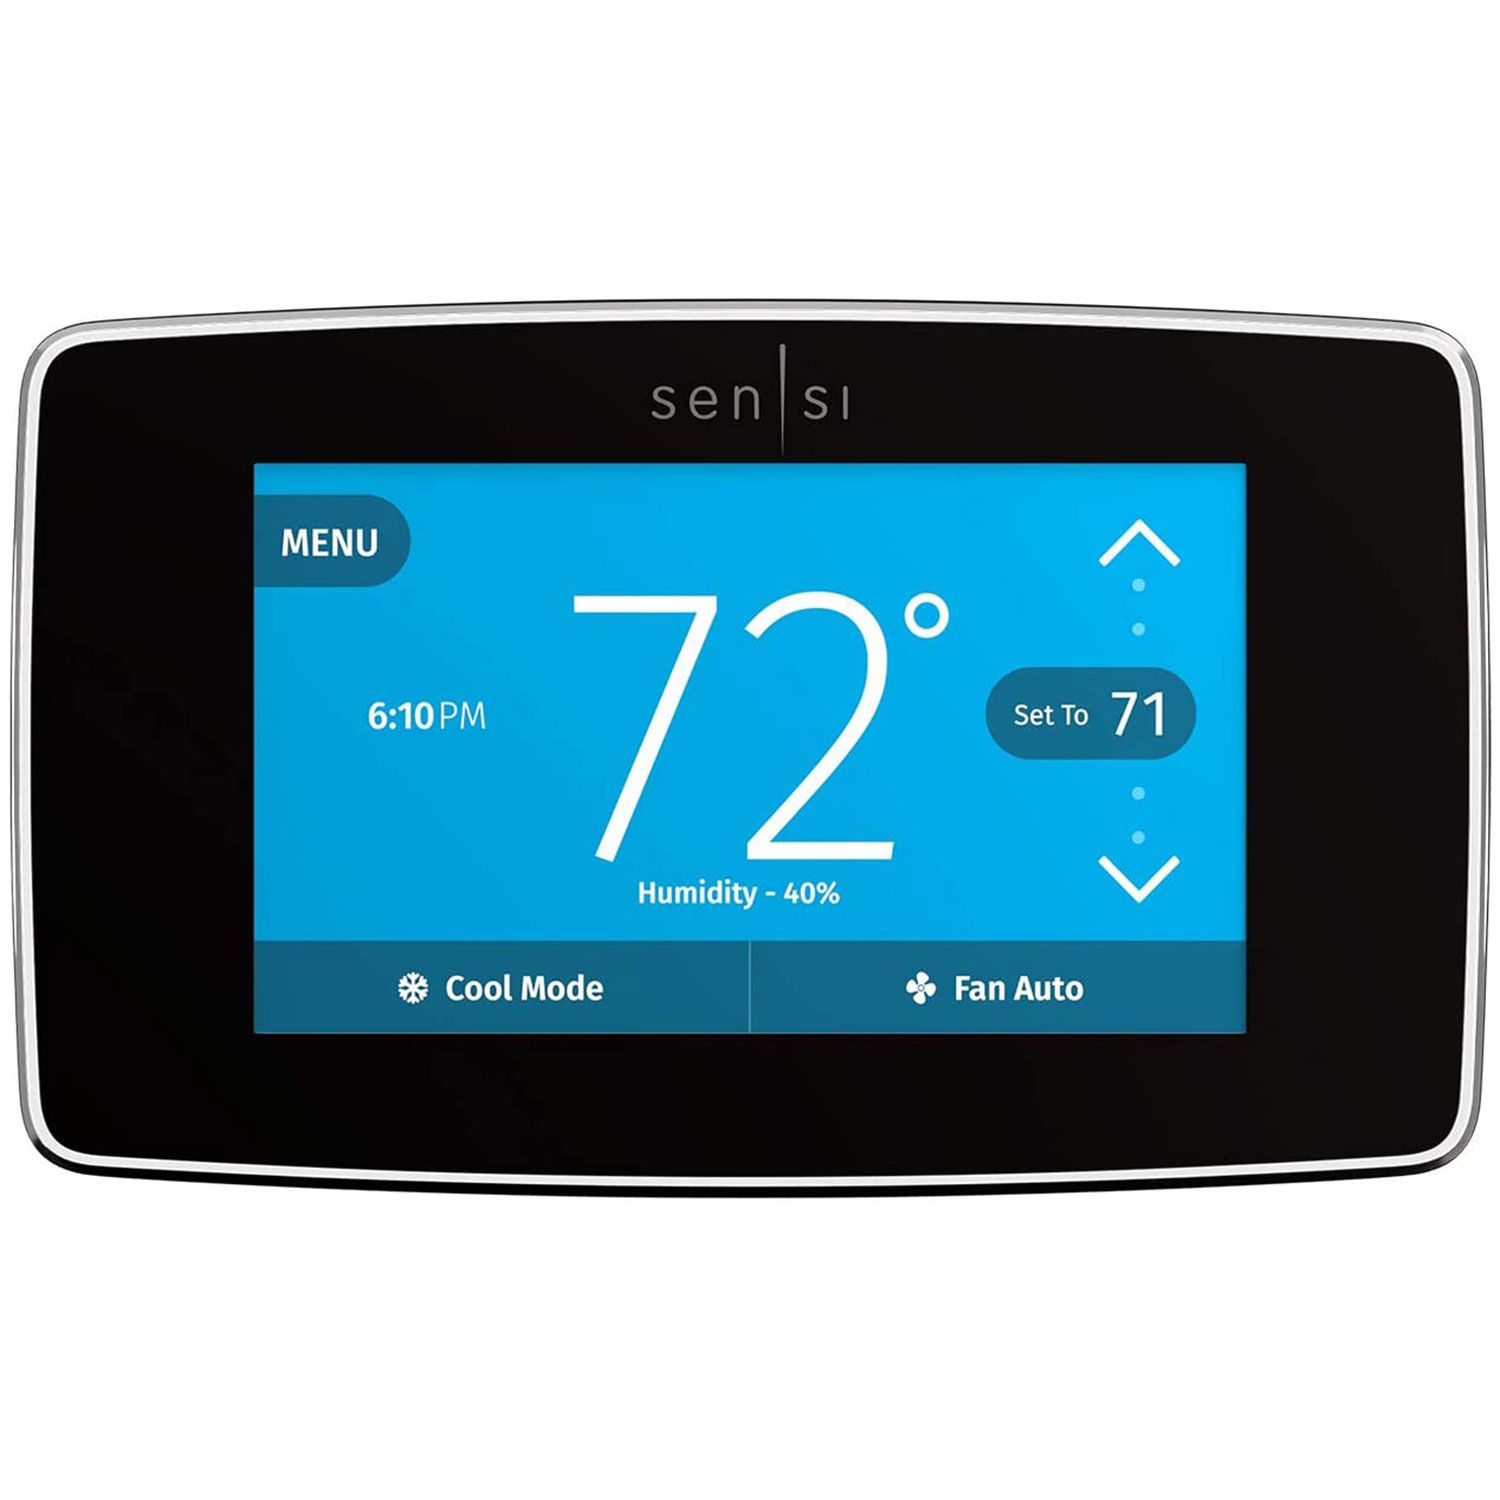 emerson sensi touch wifi smart thermostat touchscreen color display alexa